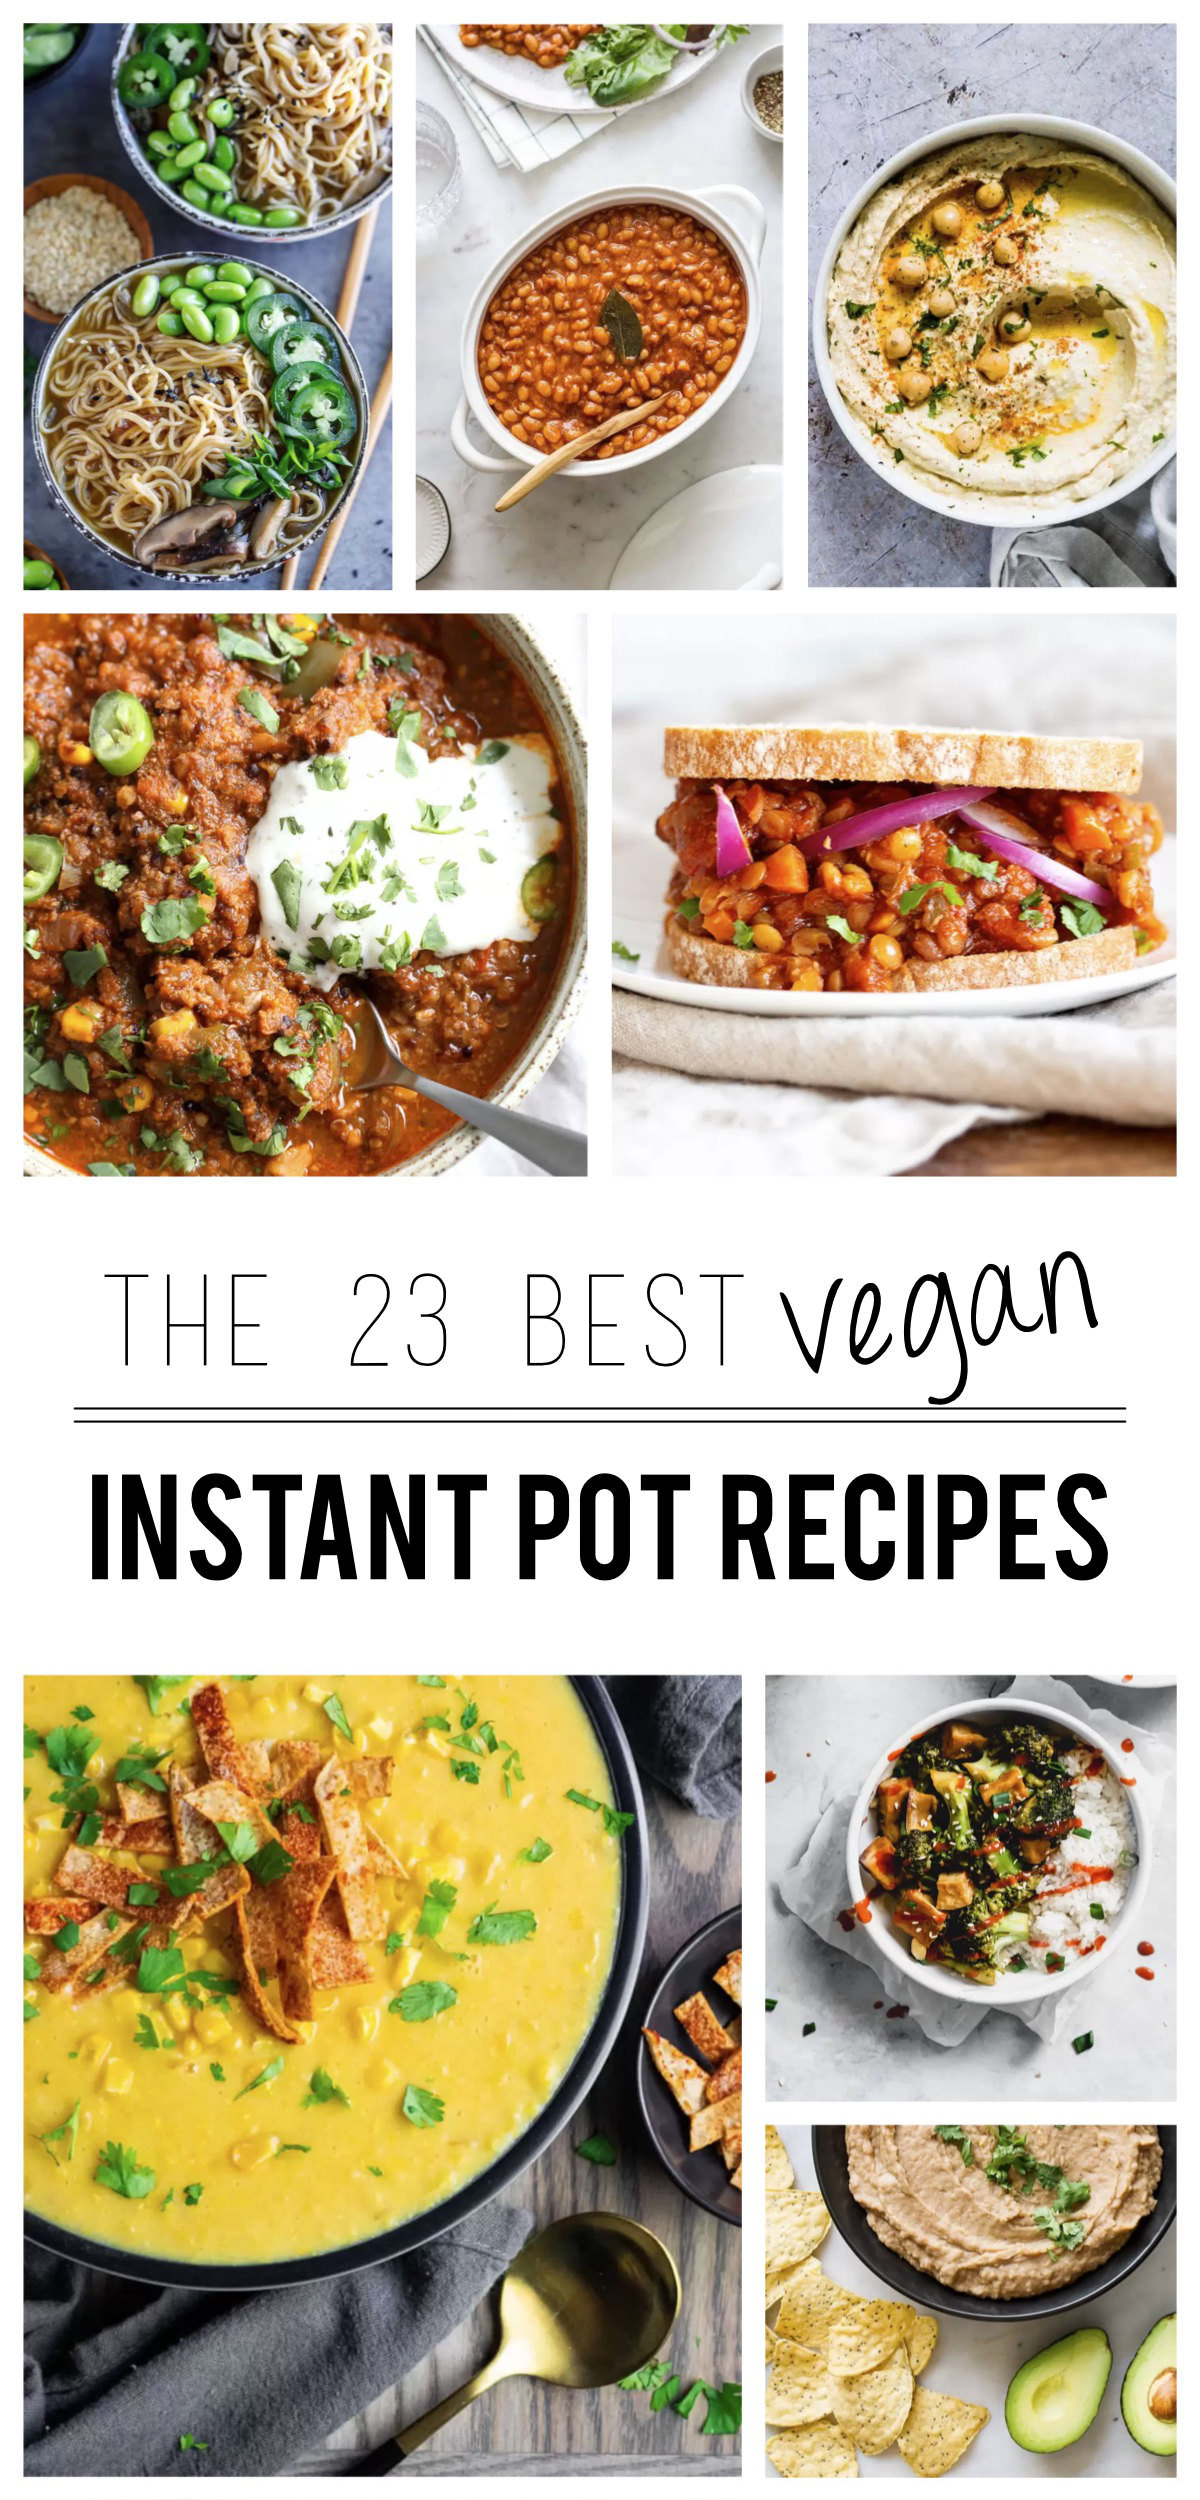 https://oneingredientchef.com/wp-content/uploads/2020/10/vegan-instant-pot-recipes.jpg